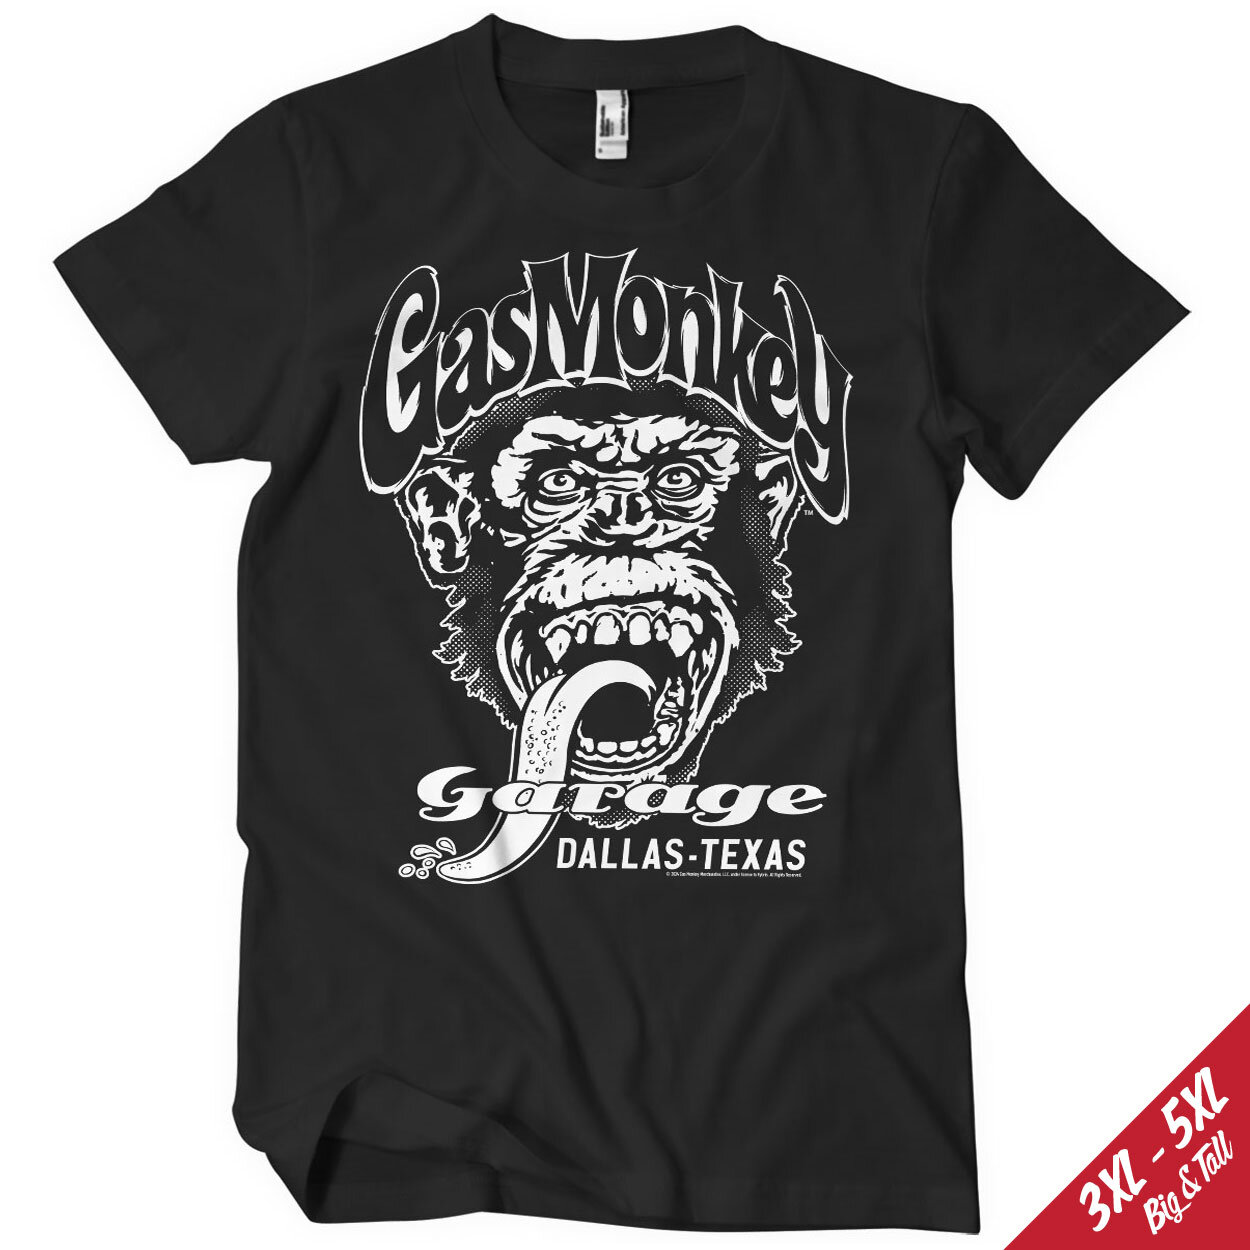 Gas Monkey Garage - Dallas, Texas Big & Tall T-Shirt